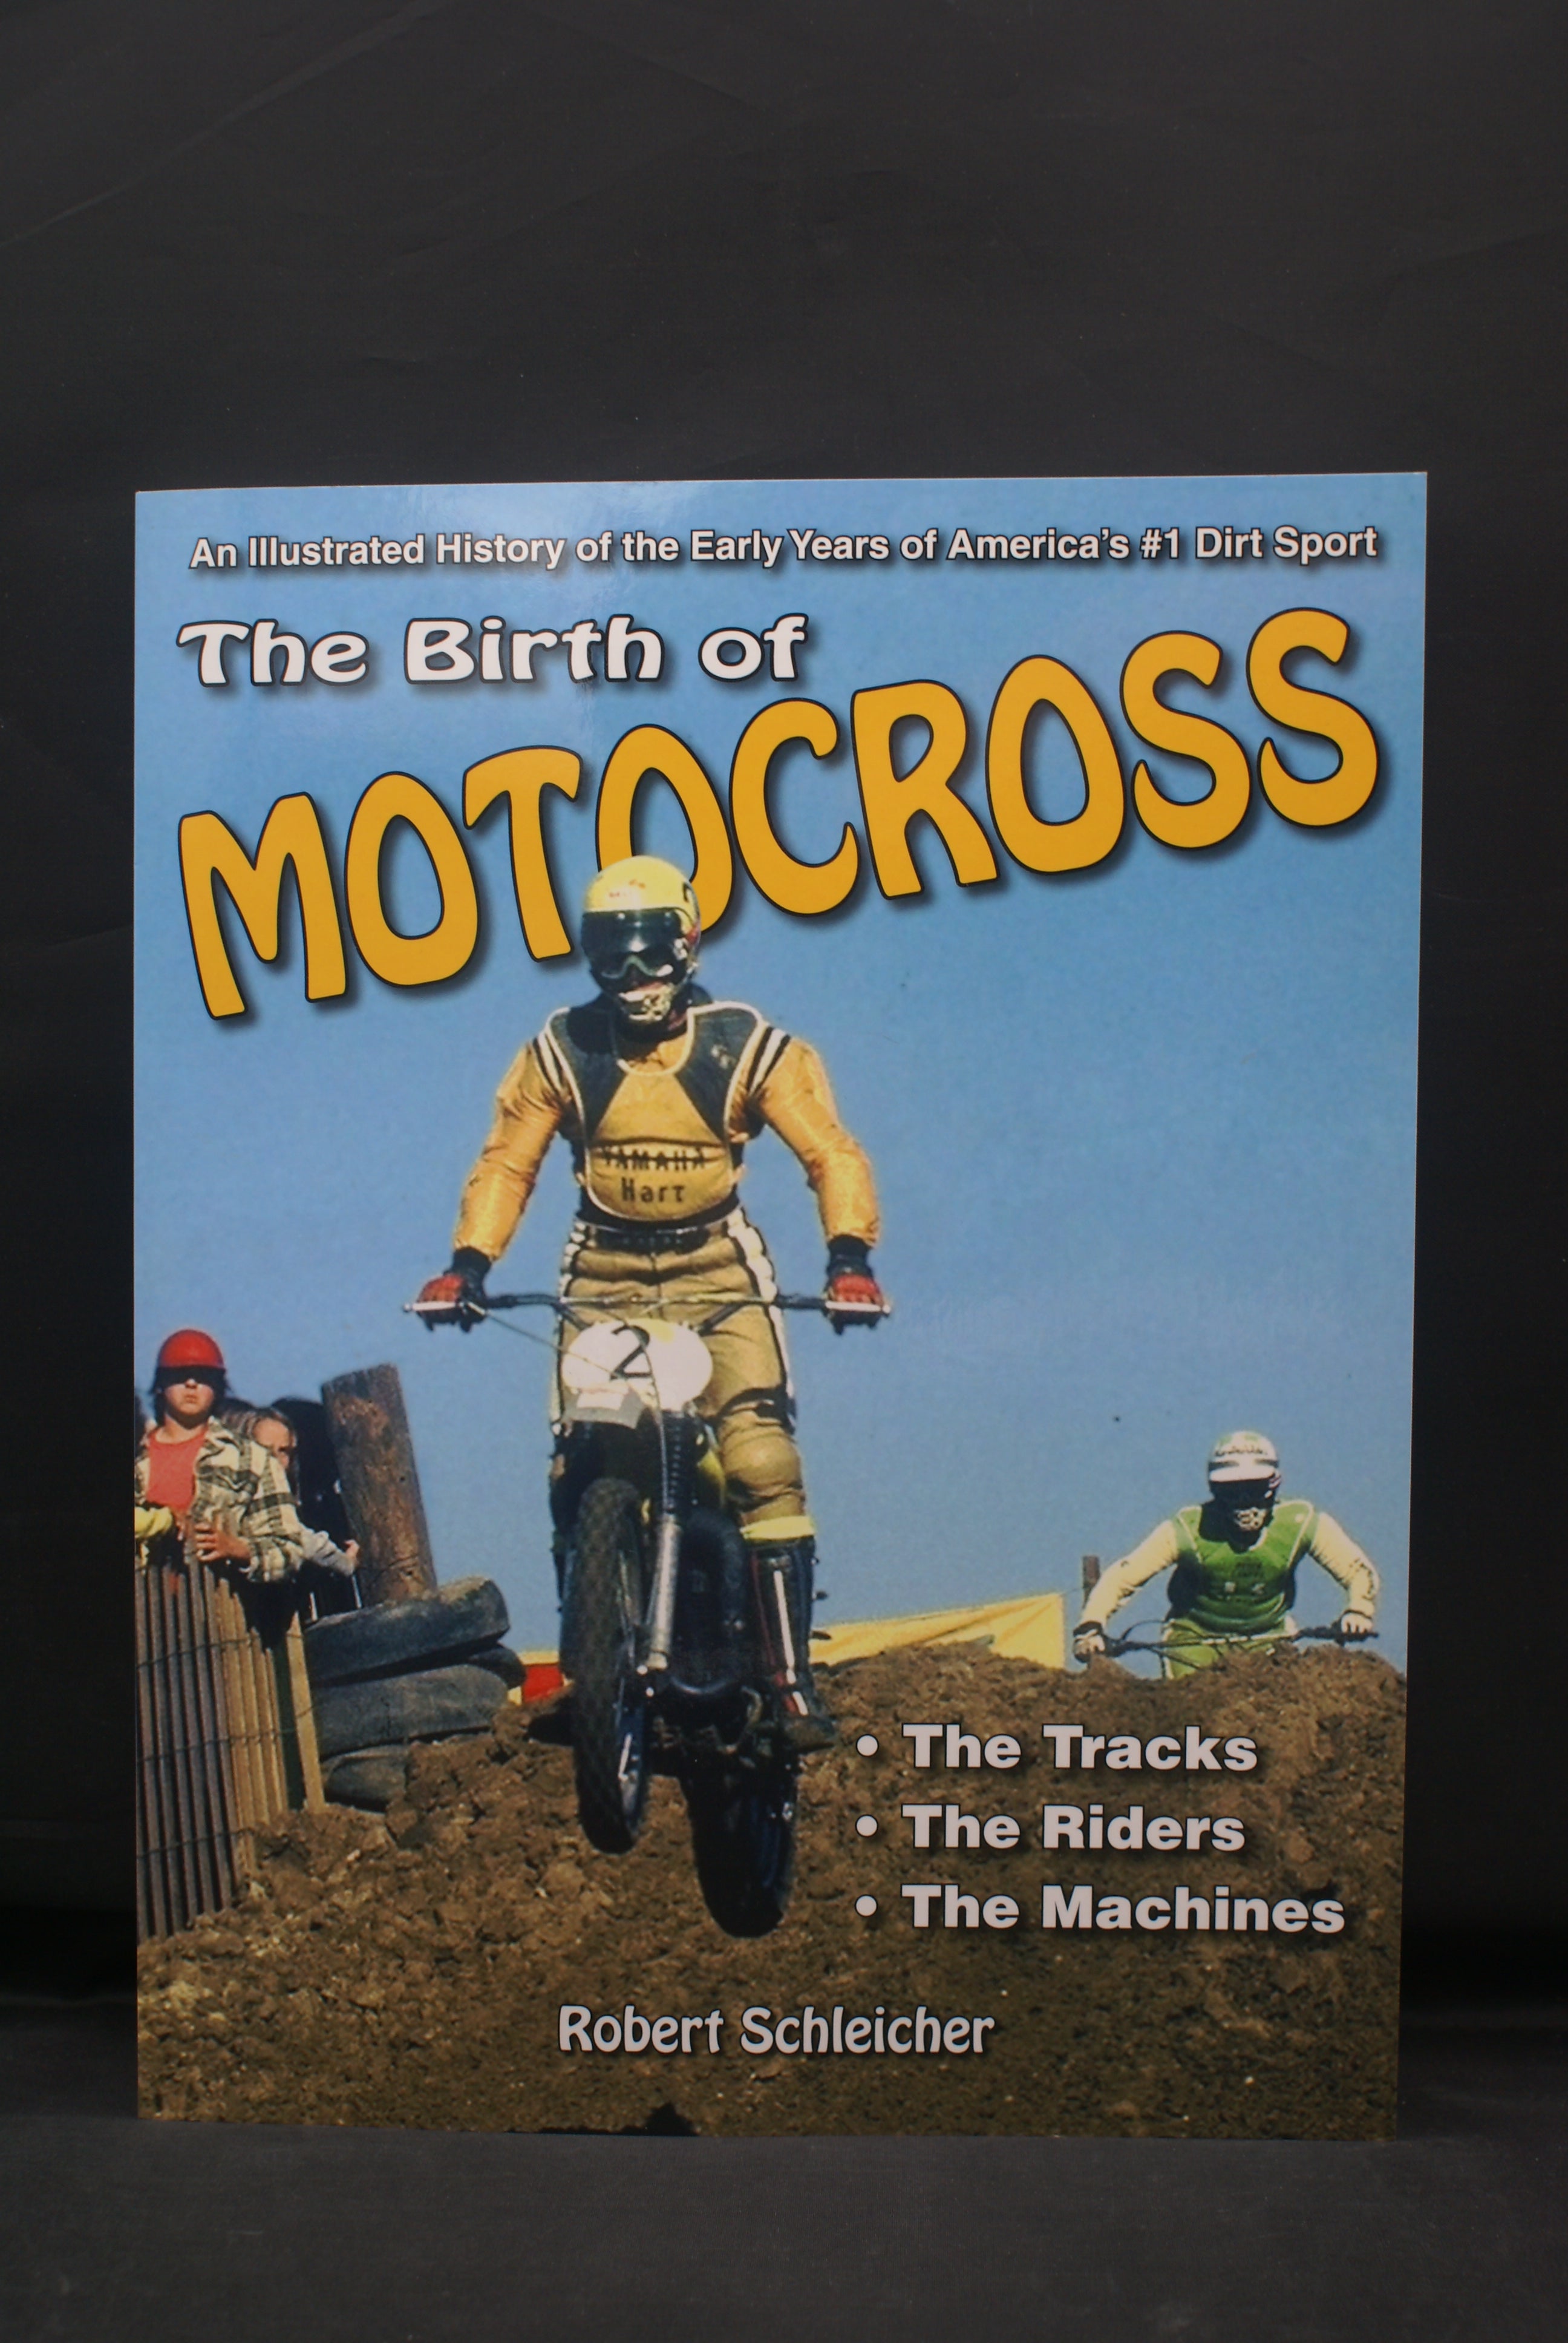 Motocross, The birth of